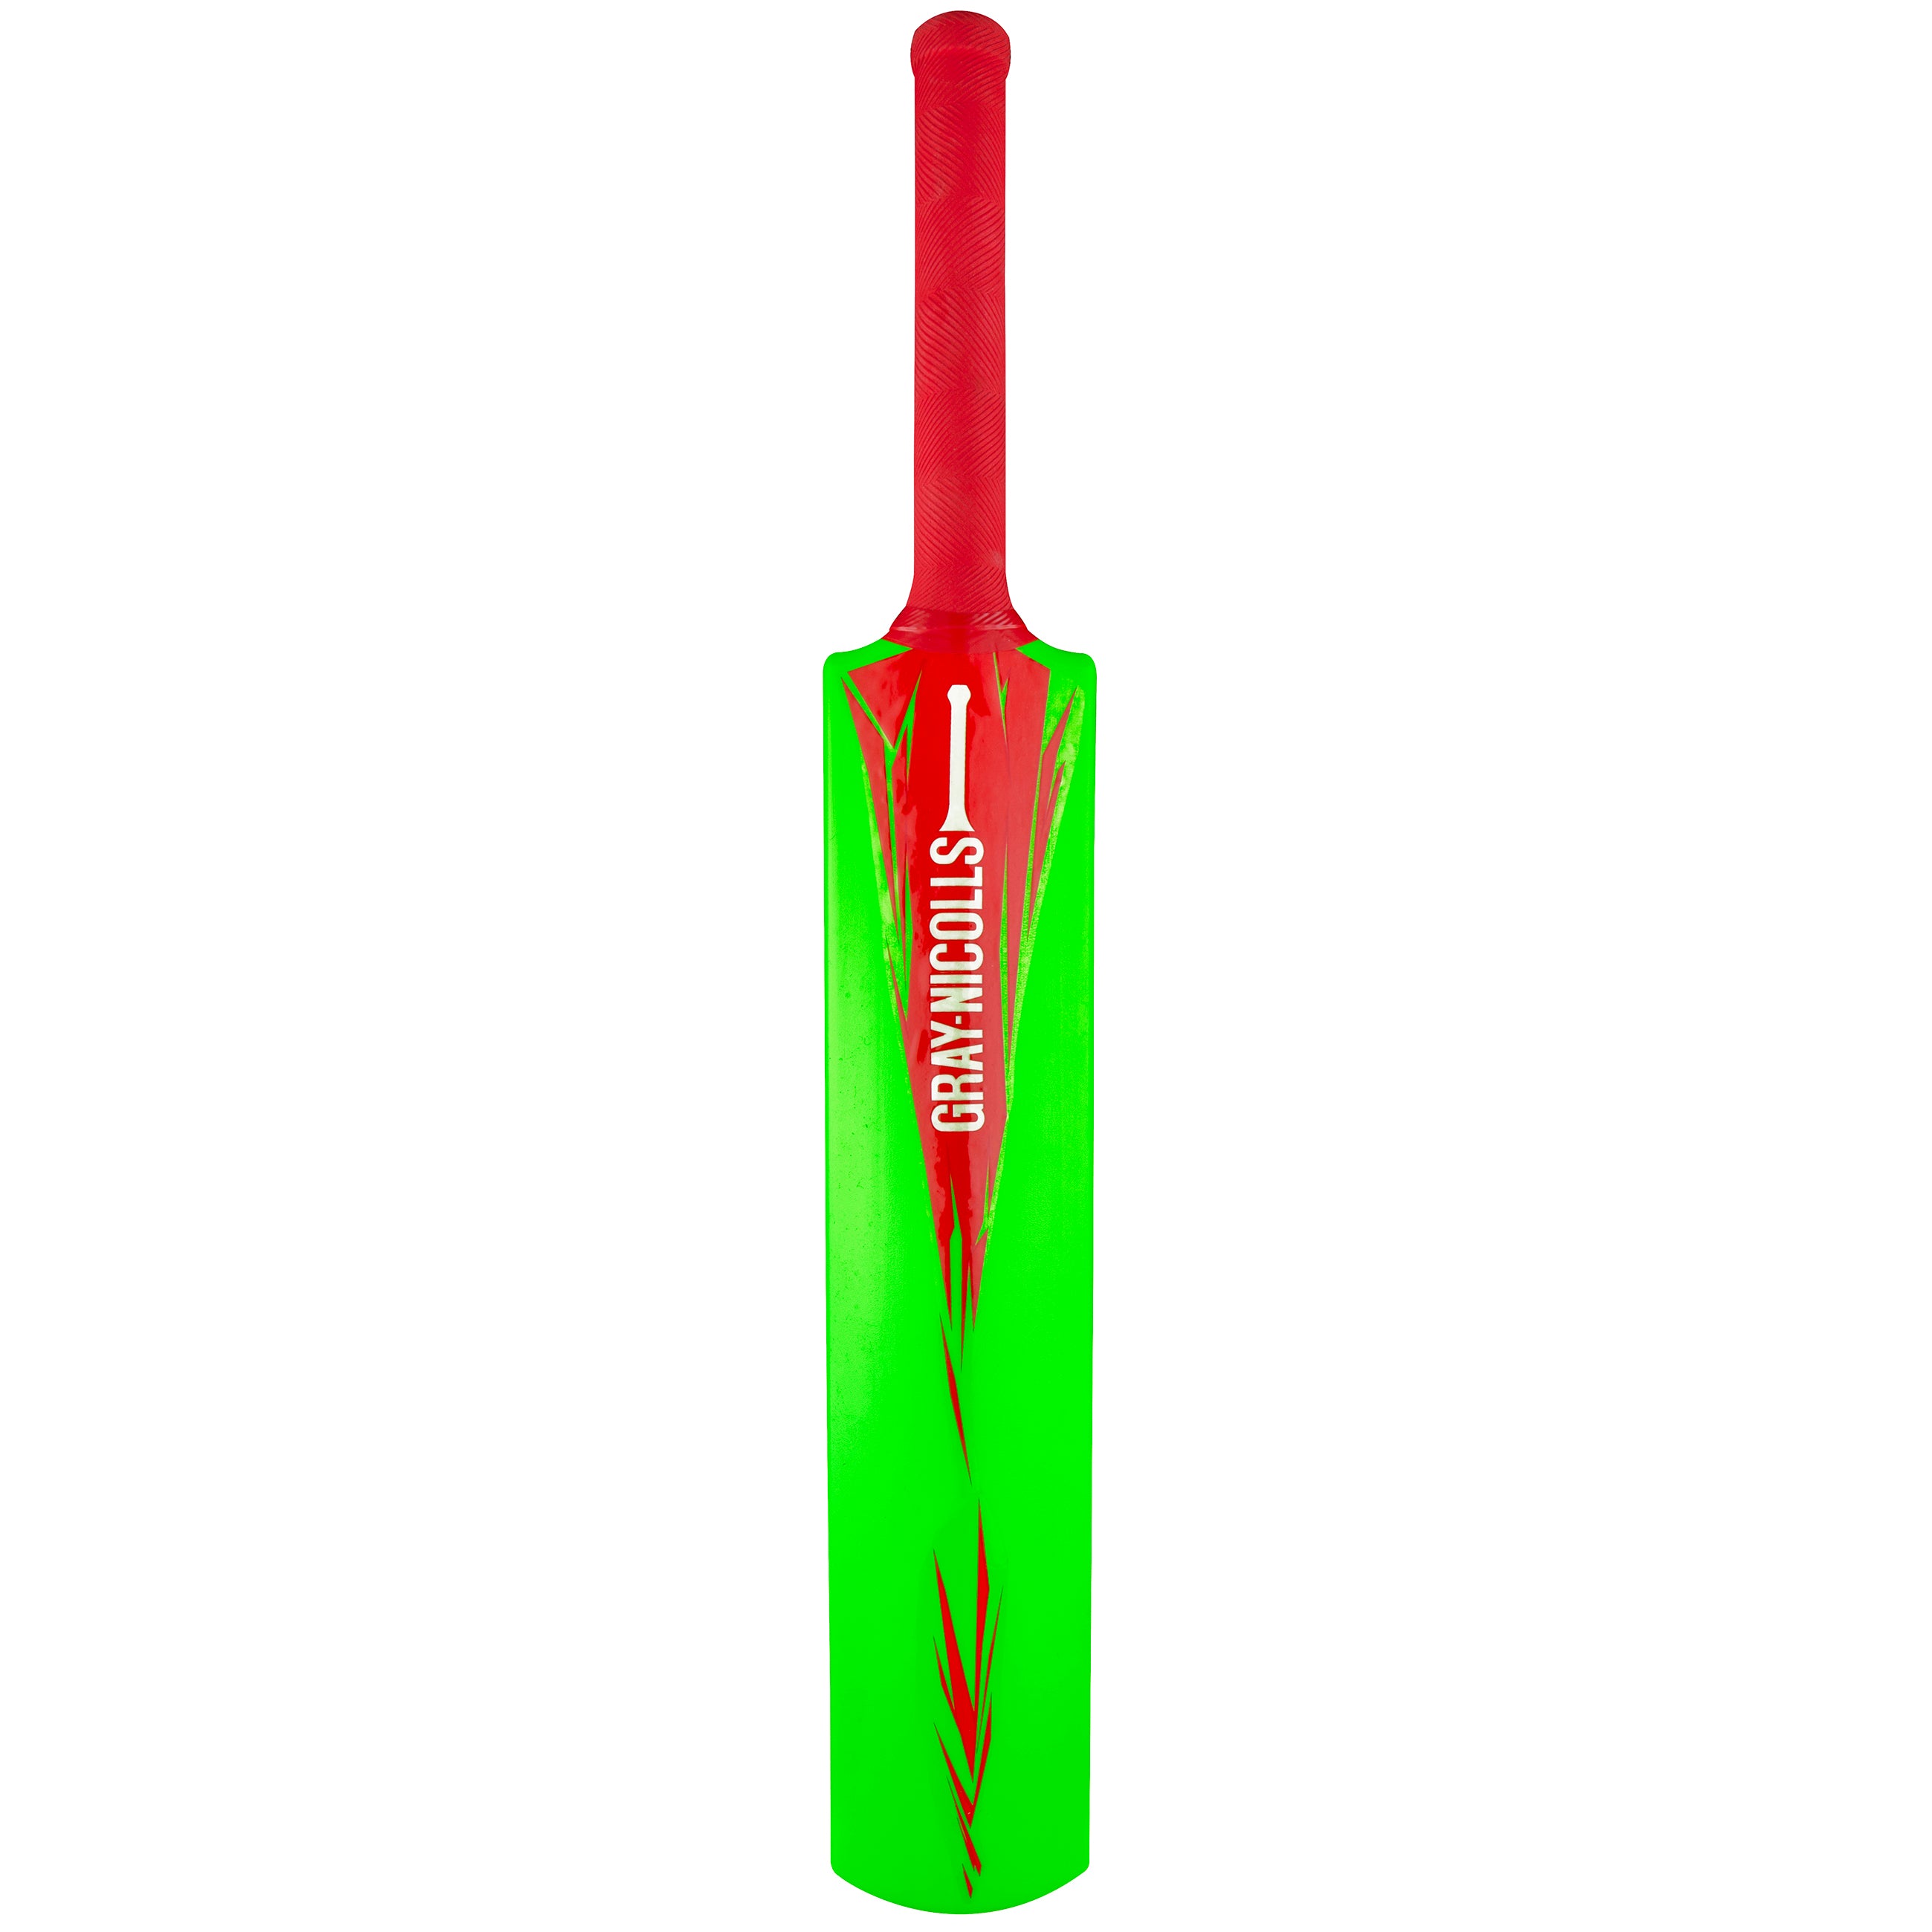 2600 CNBA20 5802553 Plastic Power Play Bat Green Size 3, Back